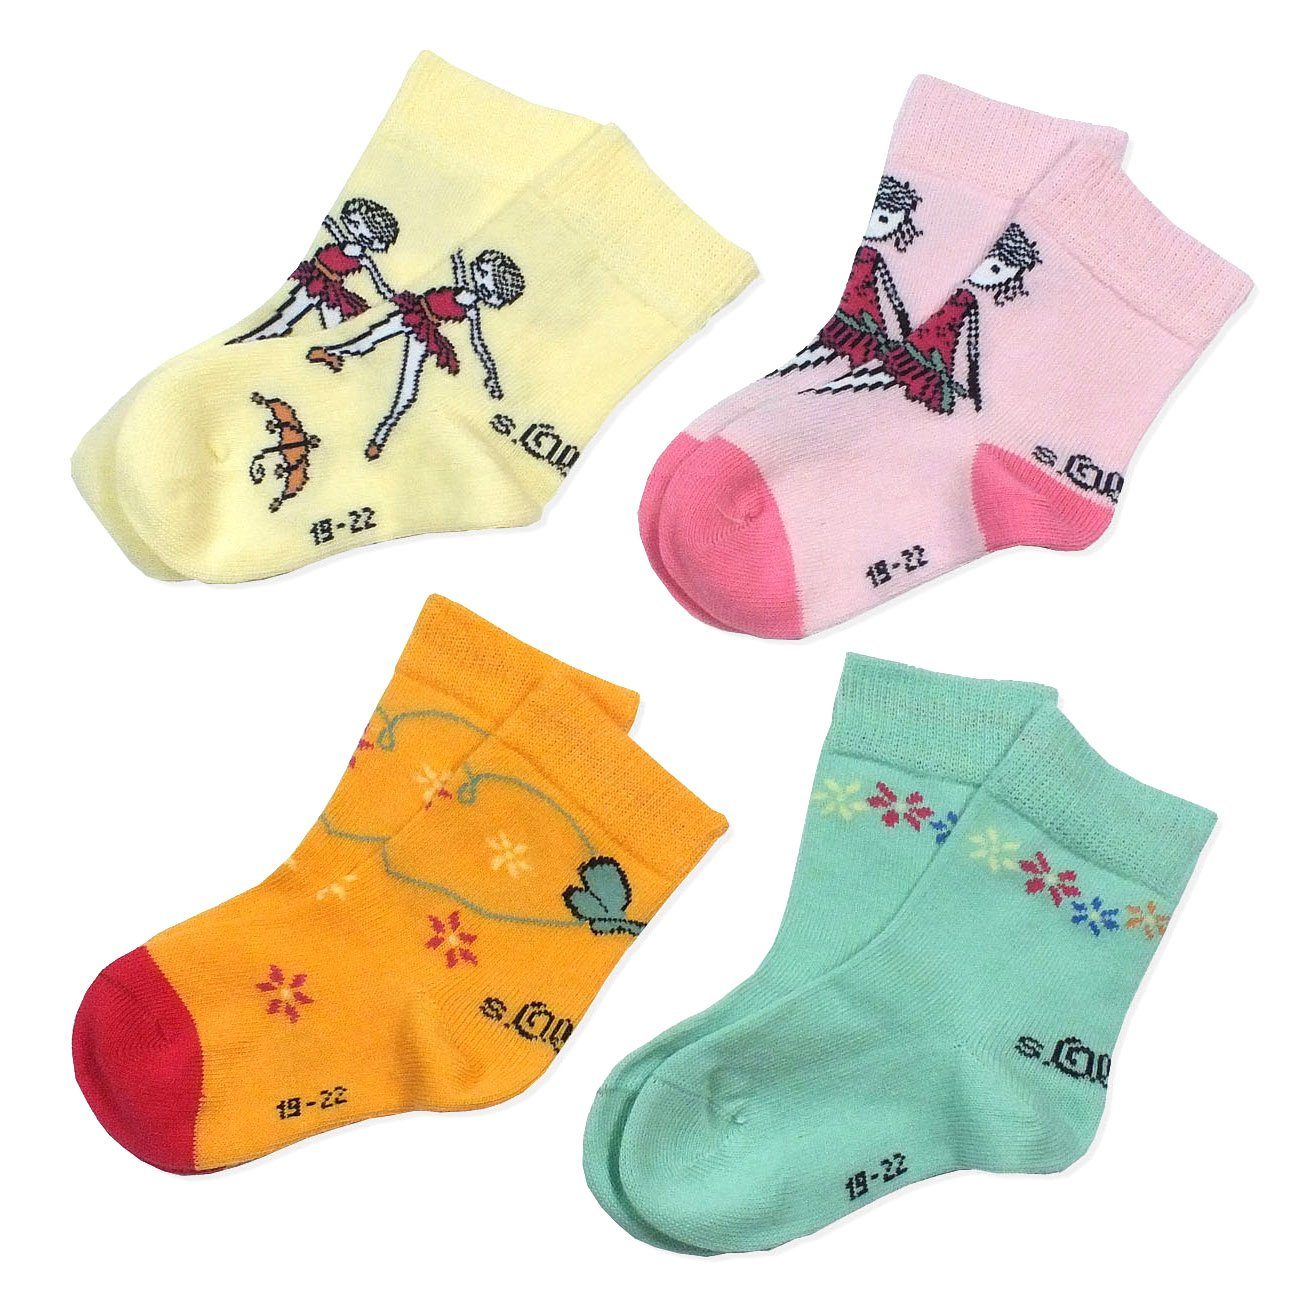 s.Oliver Langsocken S20291 (Set, 4-Paar, 4 Paar) Kinder Socken, Baby & Mädchen mit Baumwolle, Kindersocken